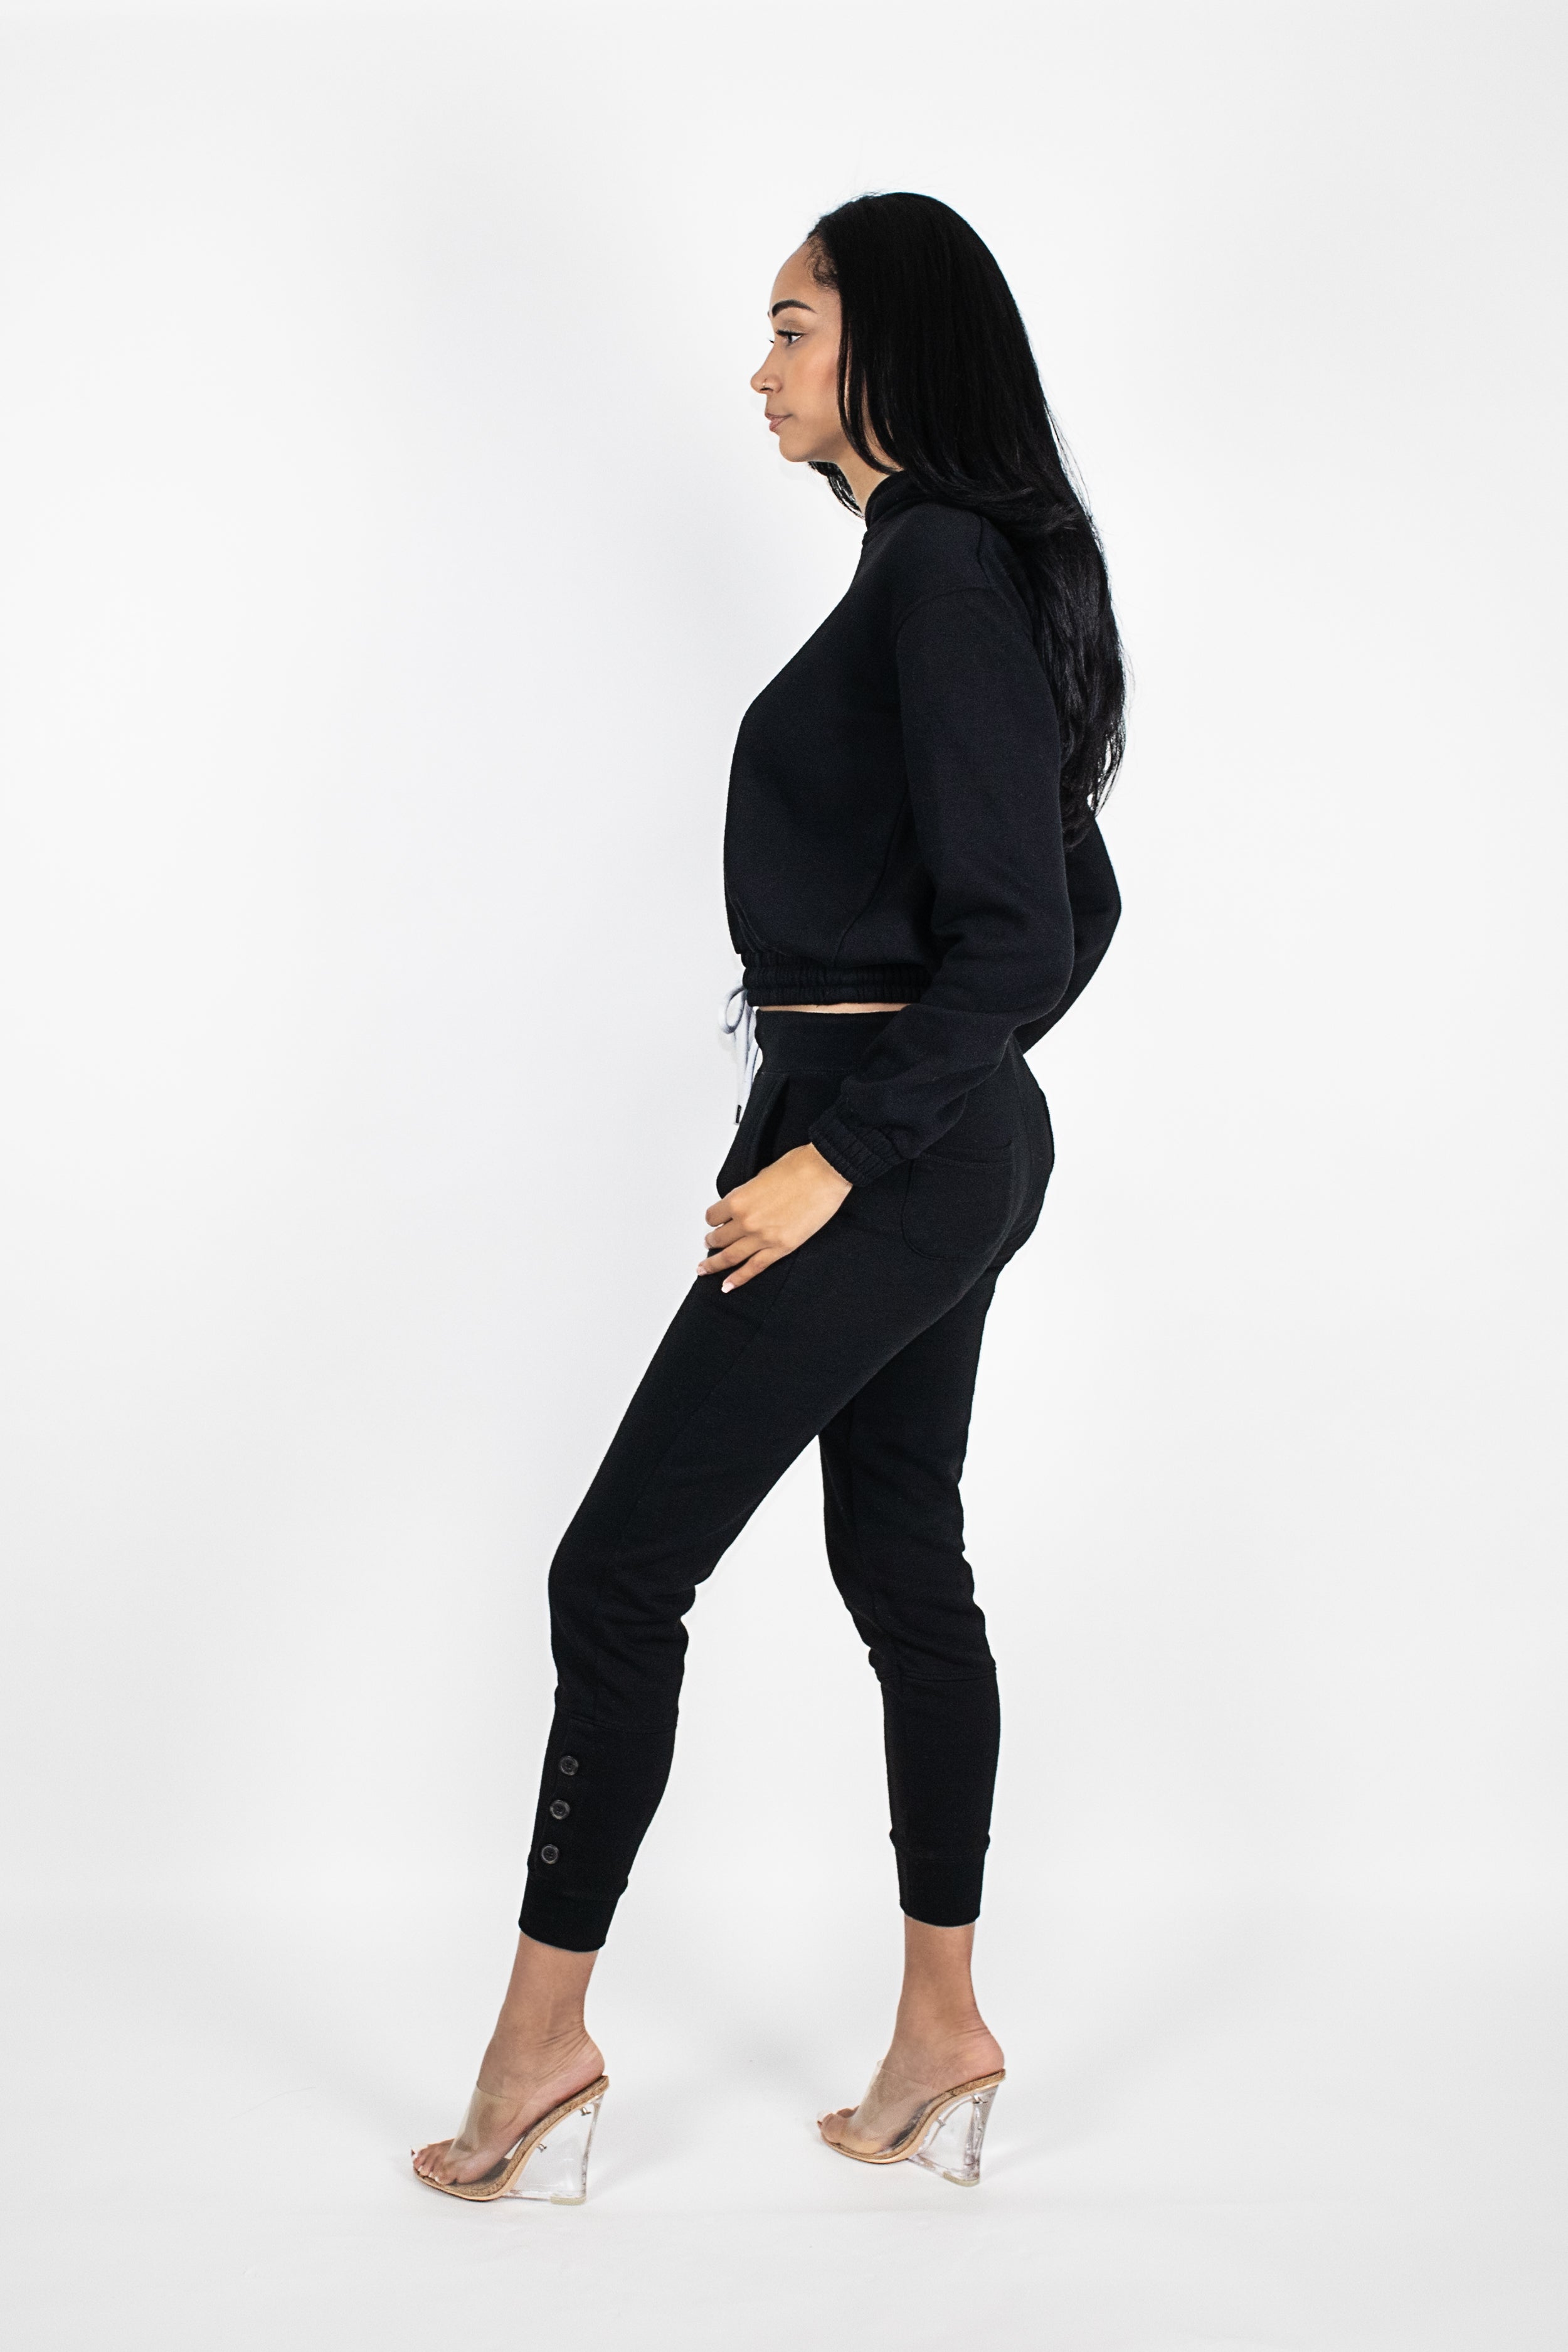 Sweatsuit Set Womens (Black) – Modern Minx